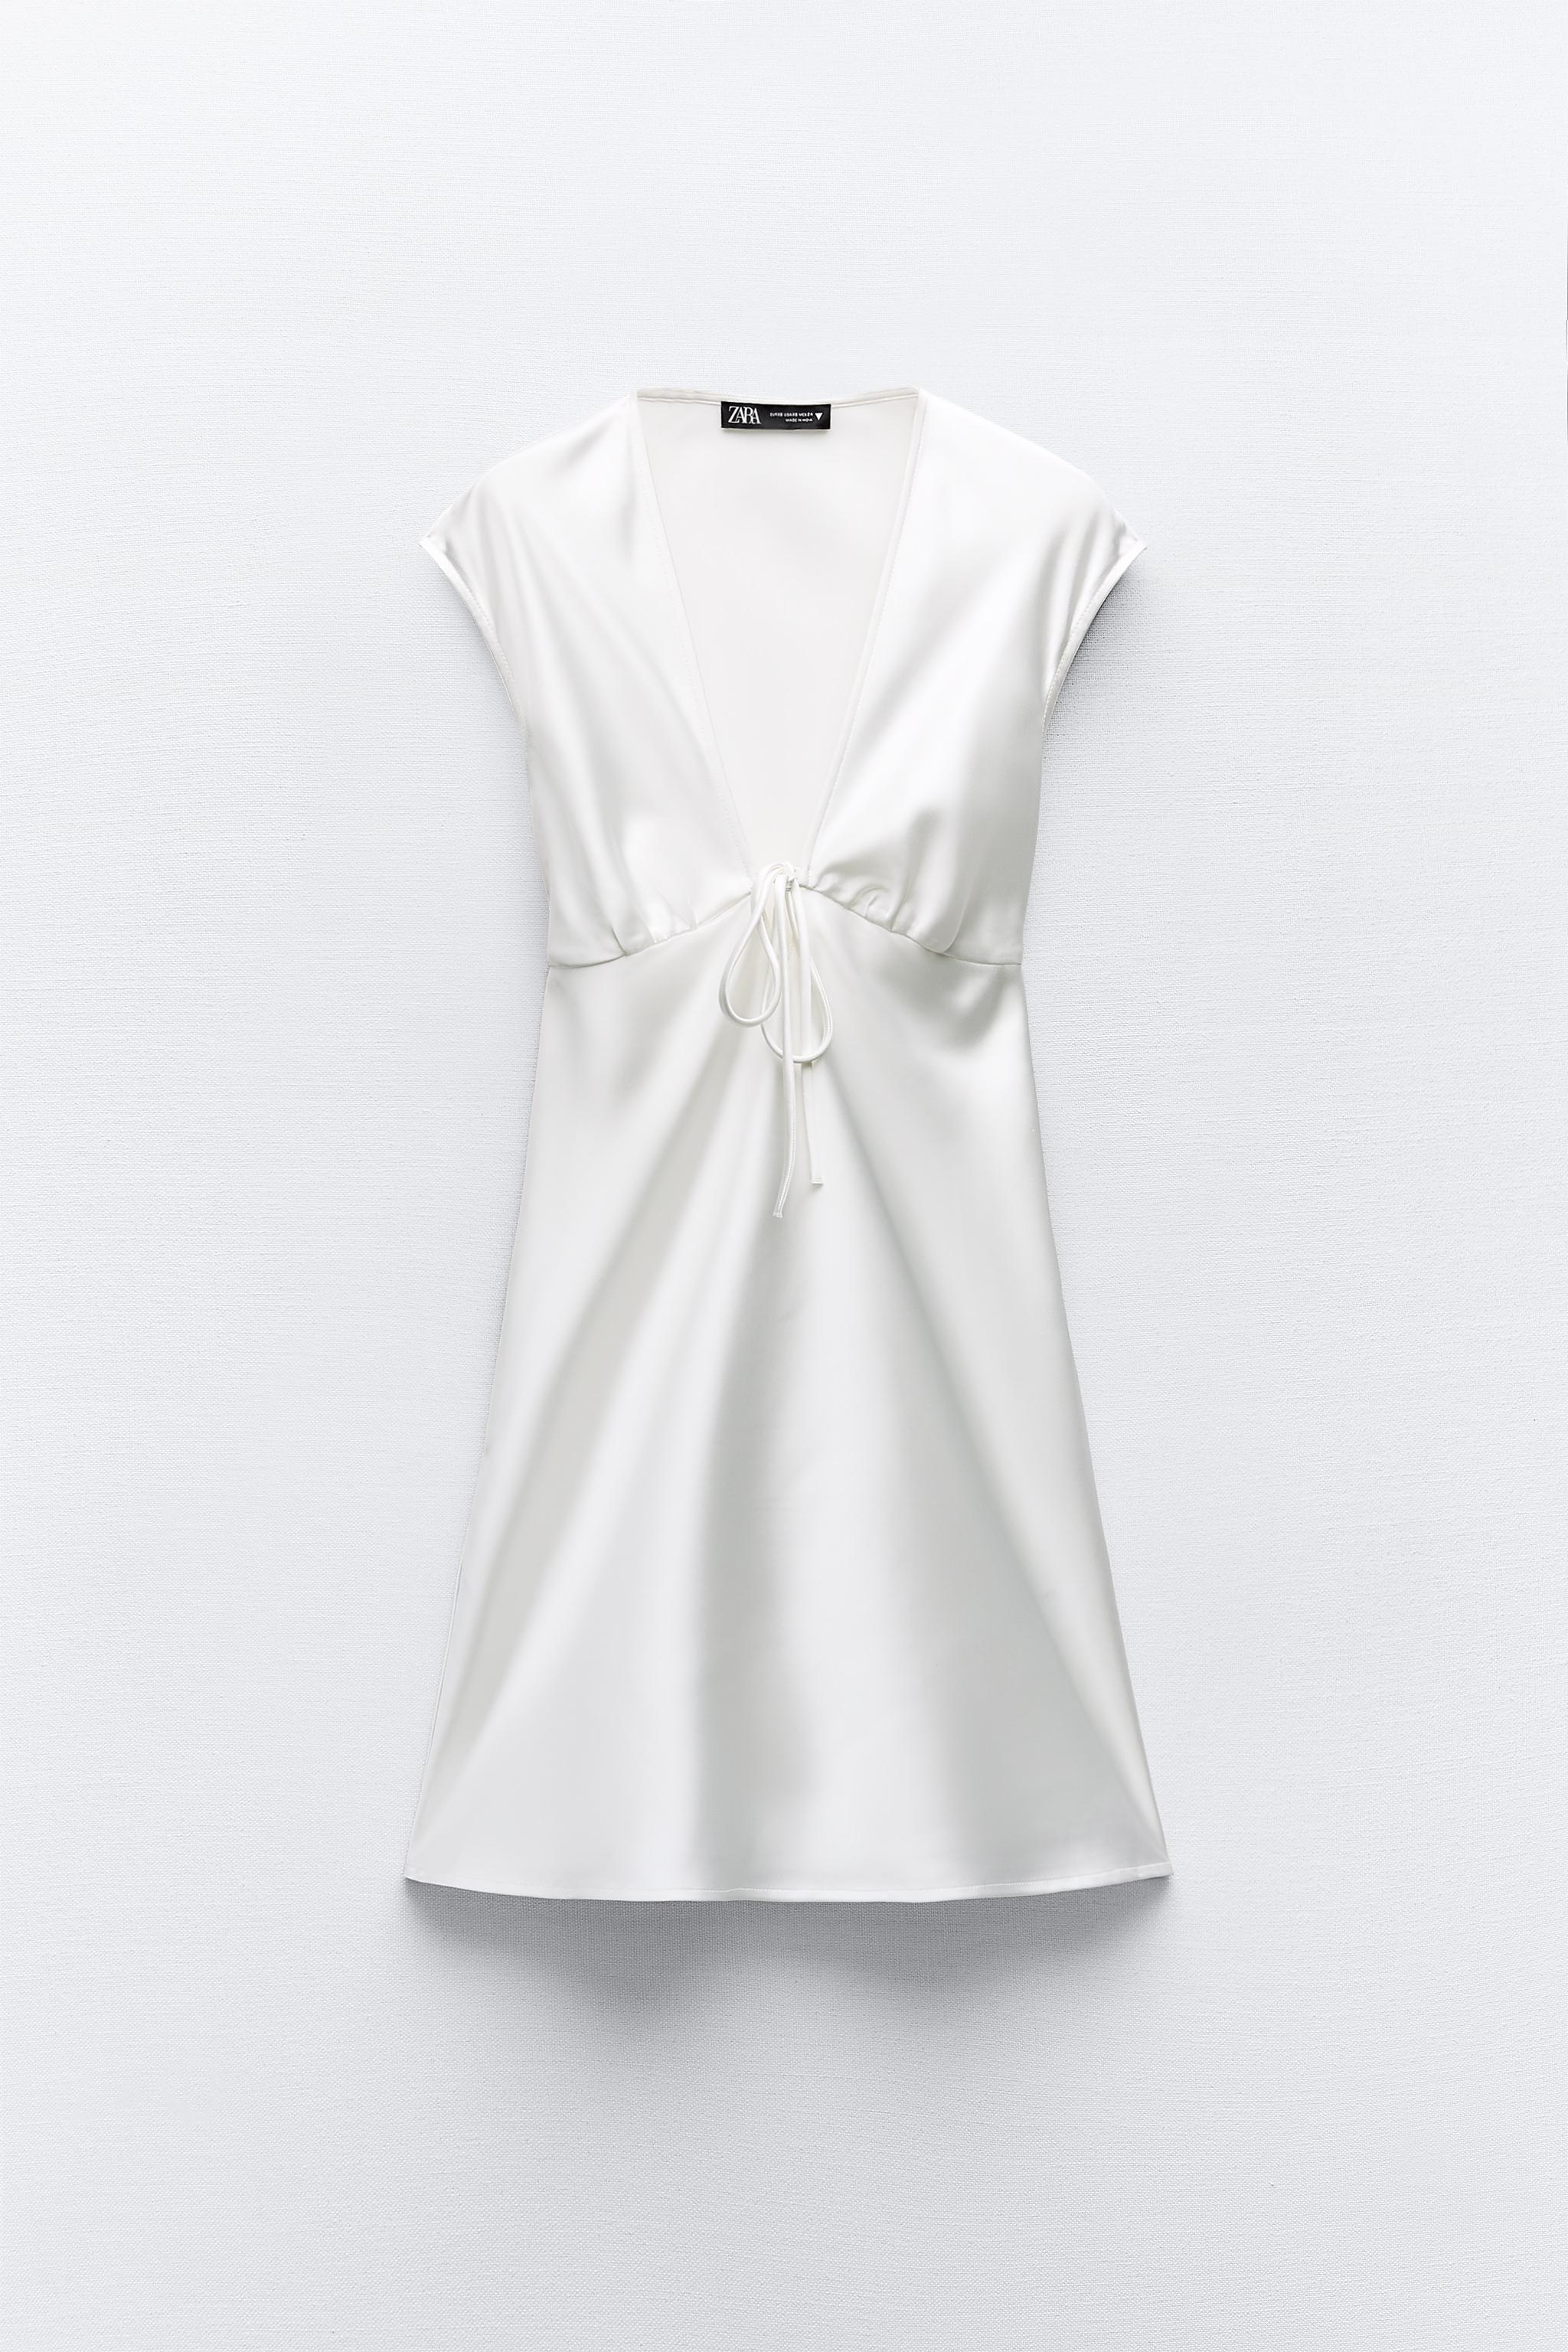 NEW ZARA WOMAN'S White Combination Satin Corset Dress. Sz S. NWT